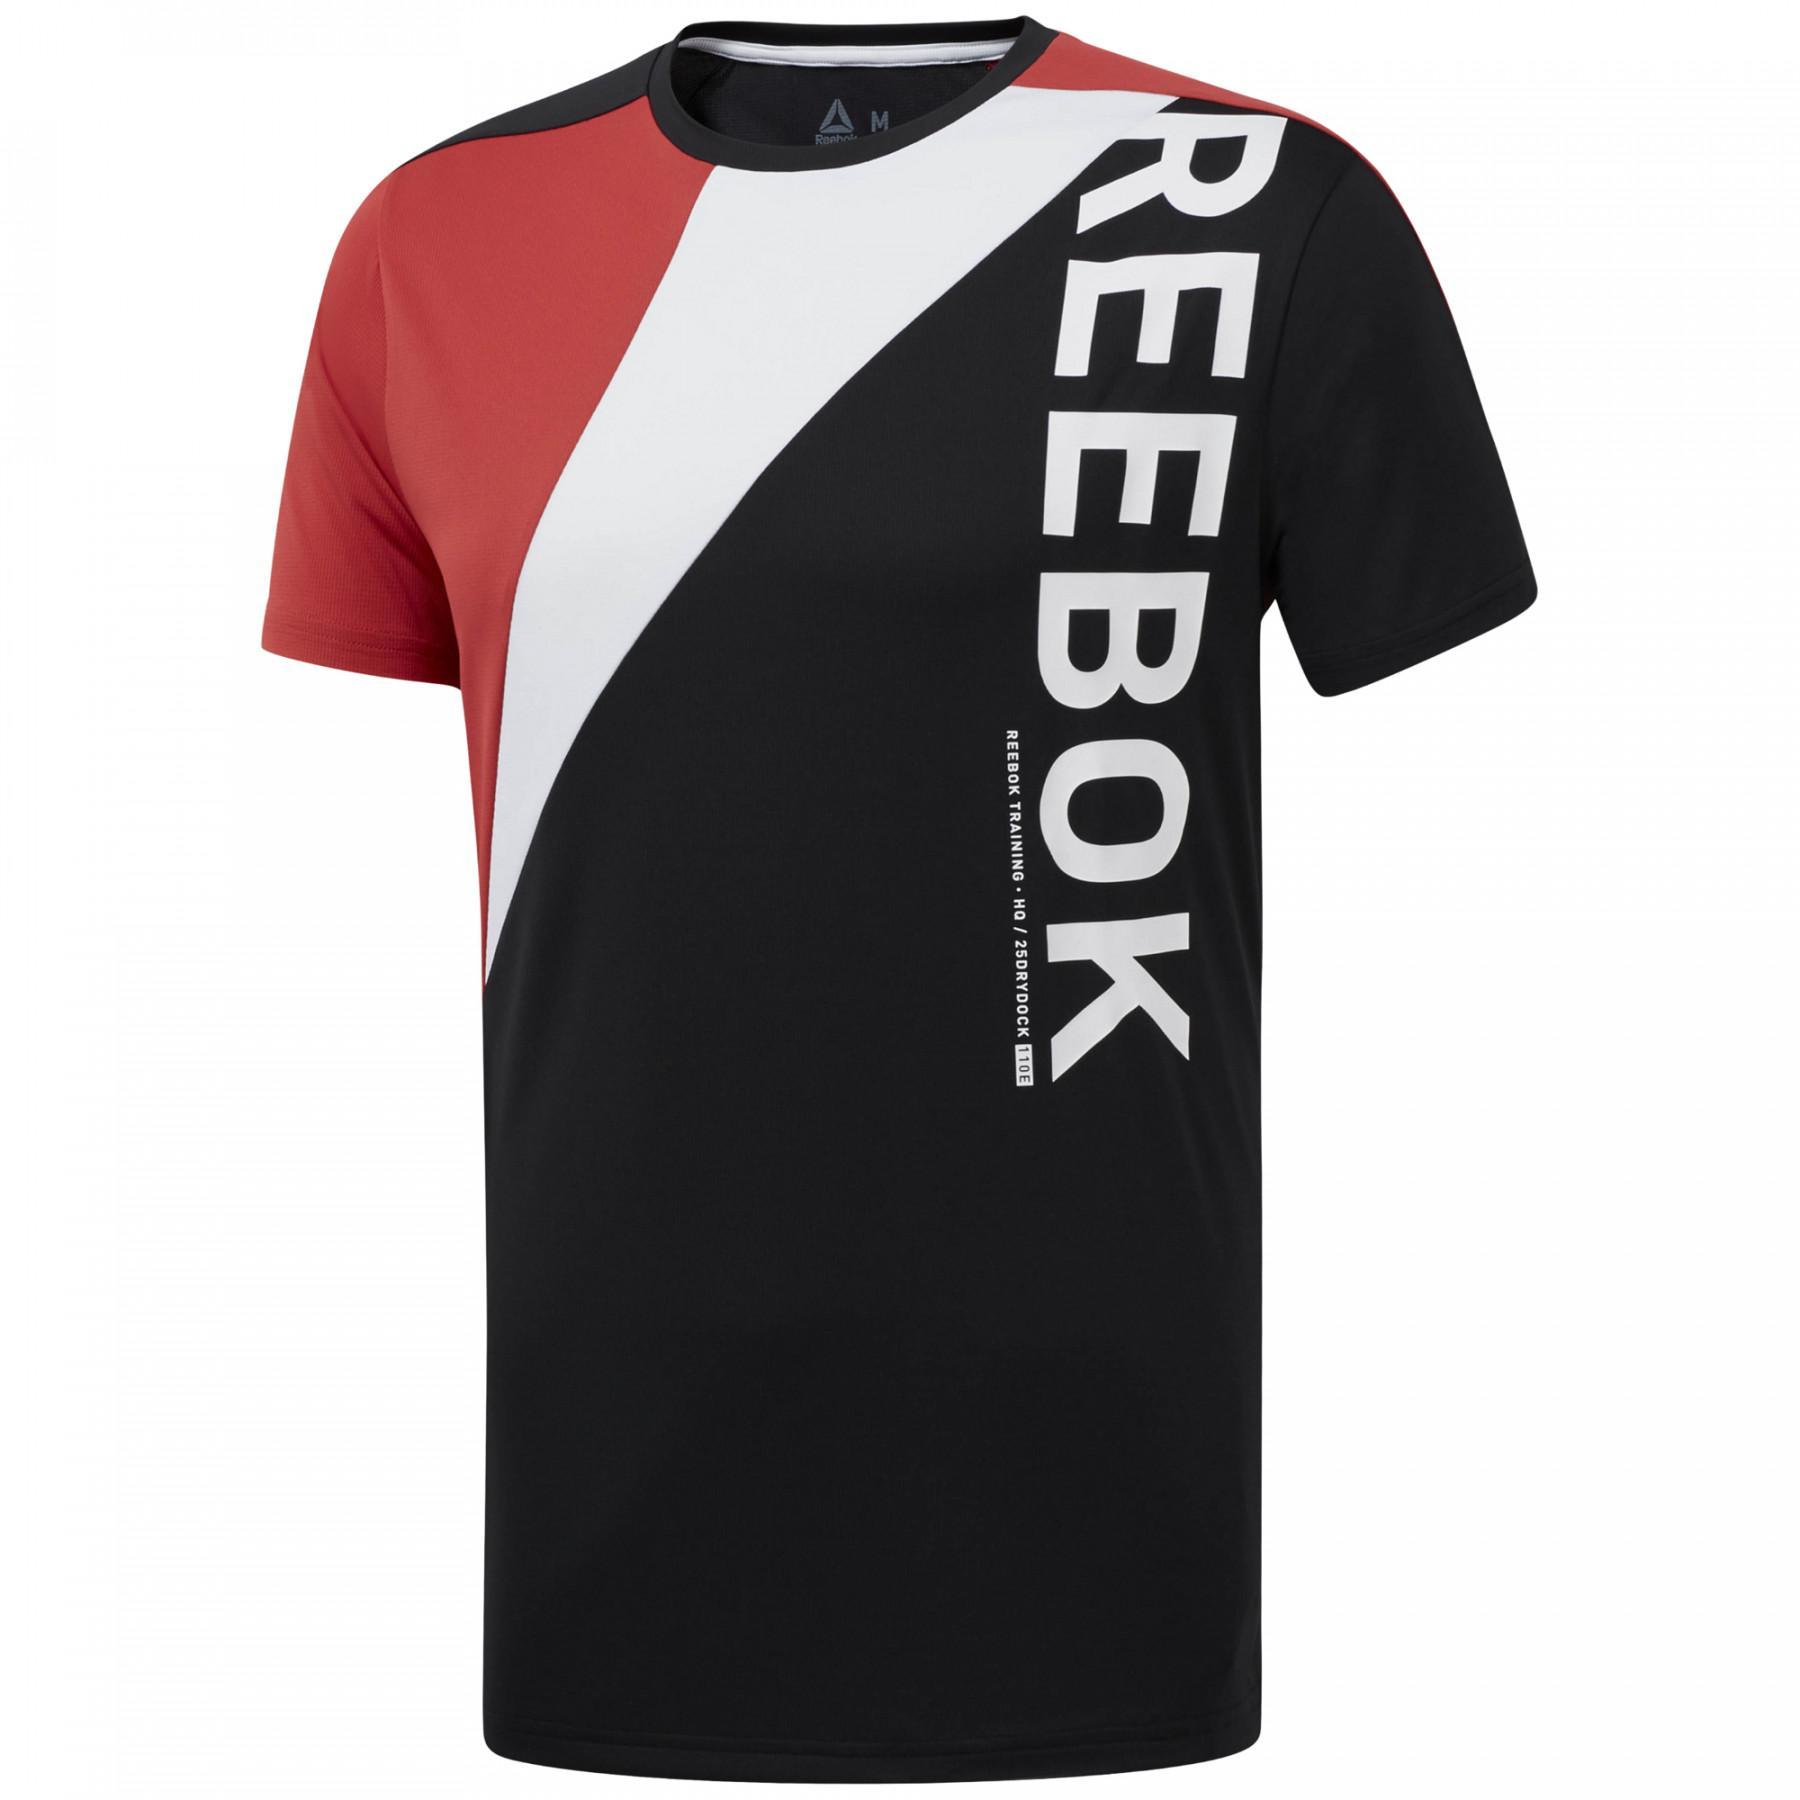 Camiseta Reebok One Series Training Colorblock